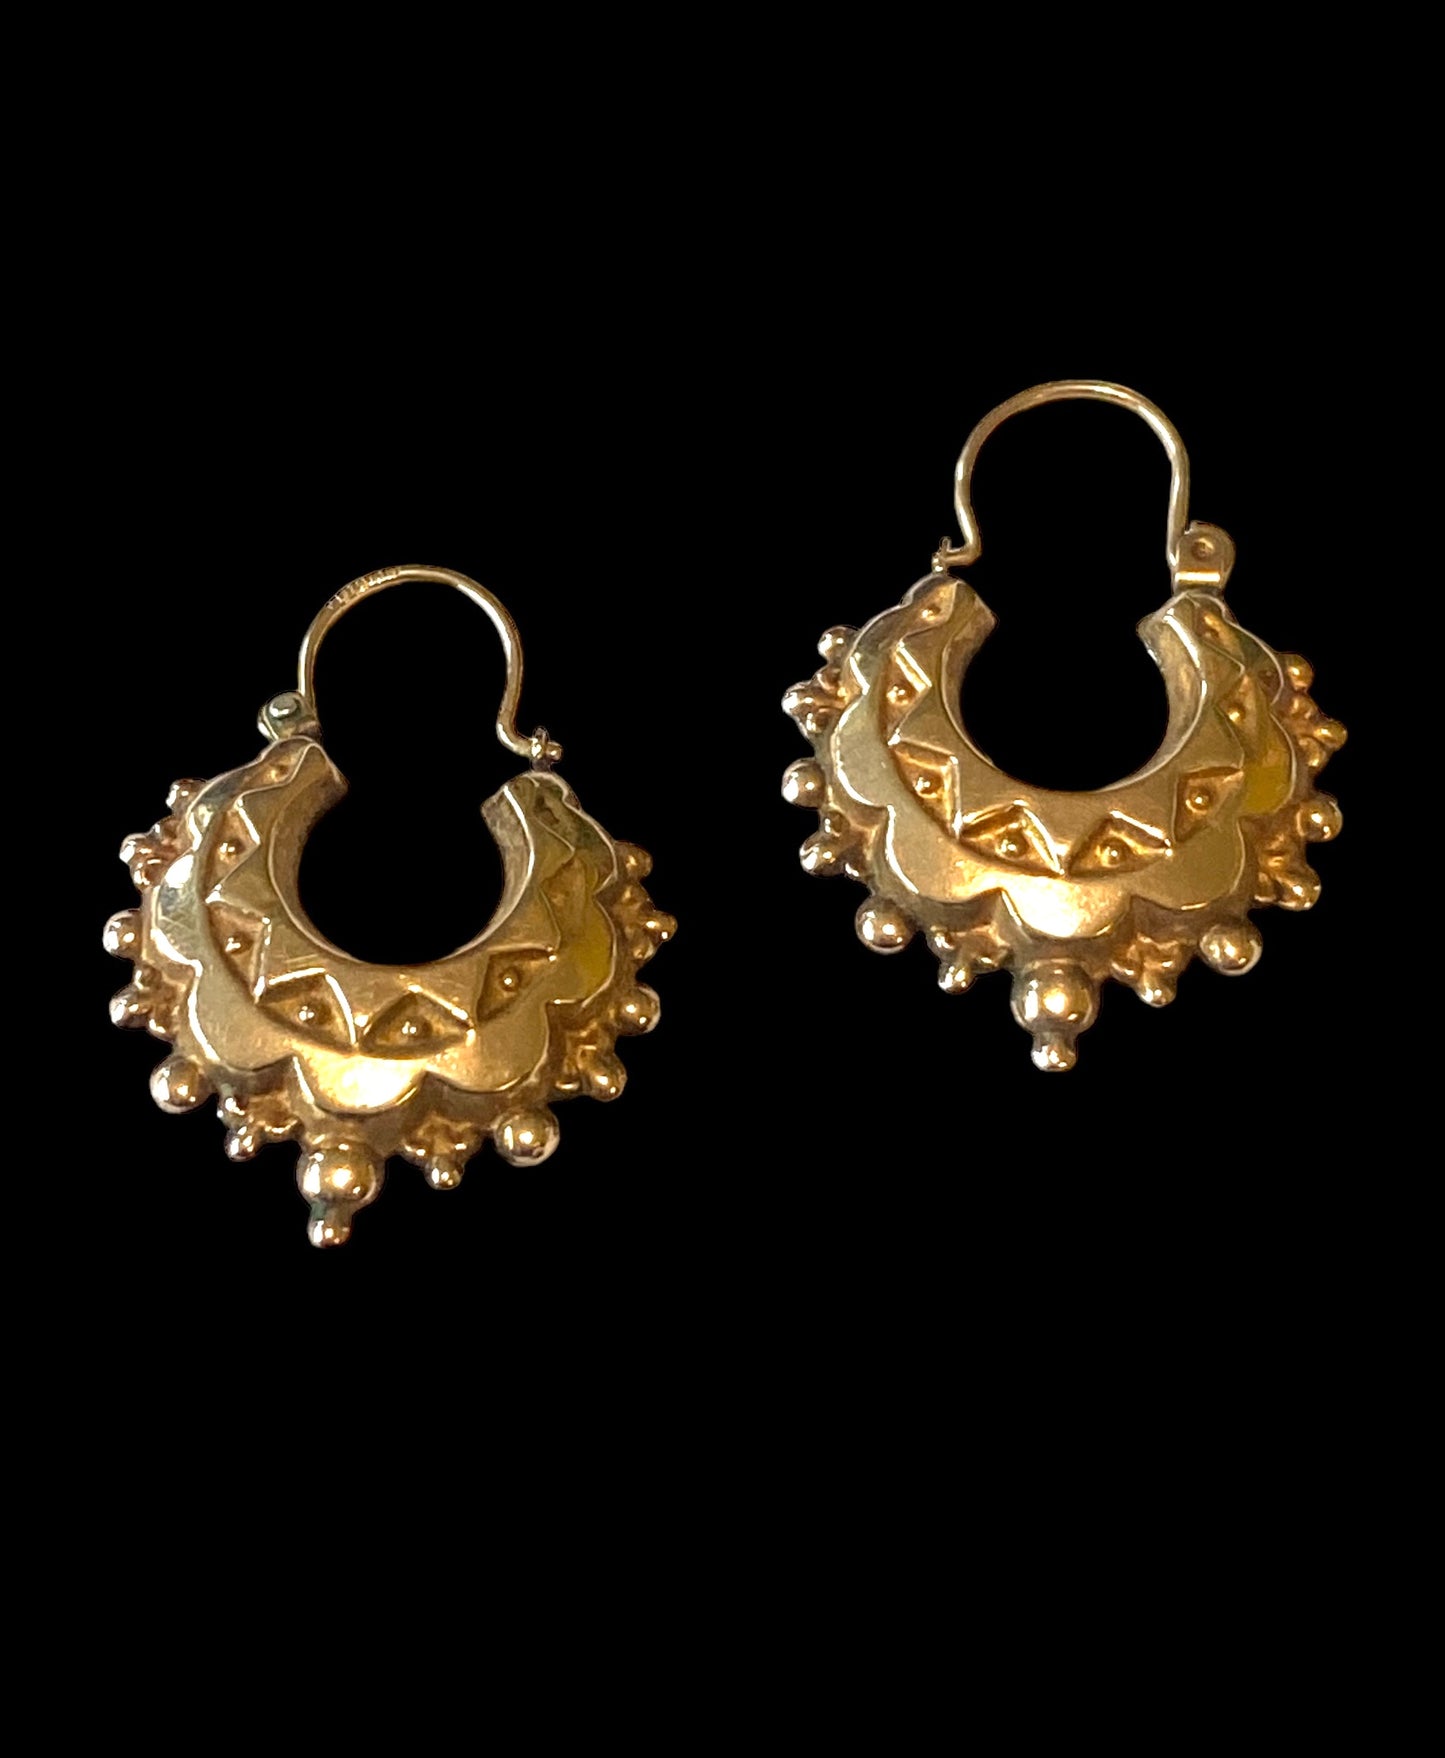 9ct vintage creole earrings circa 1988